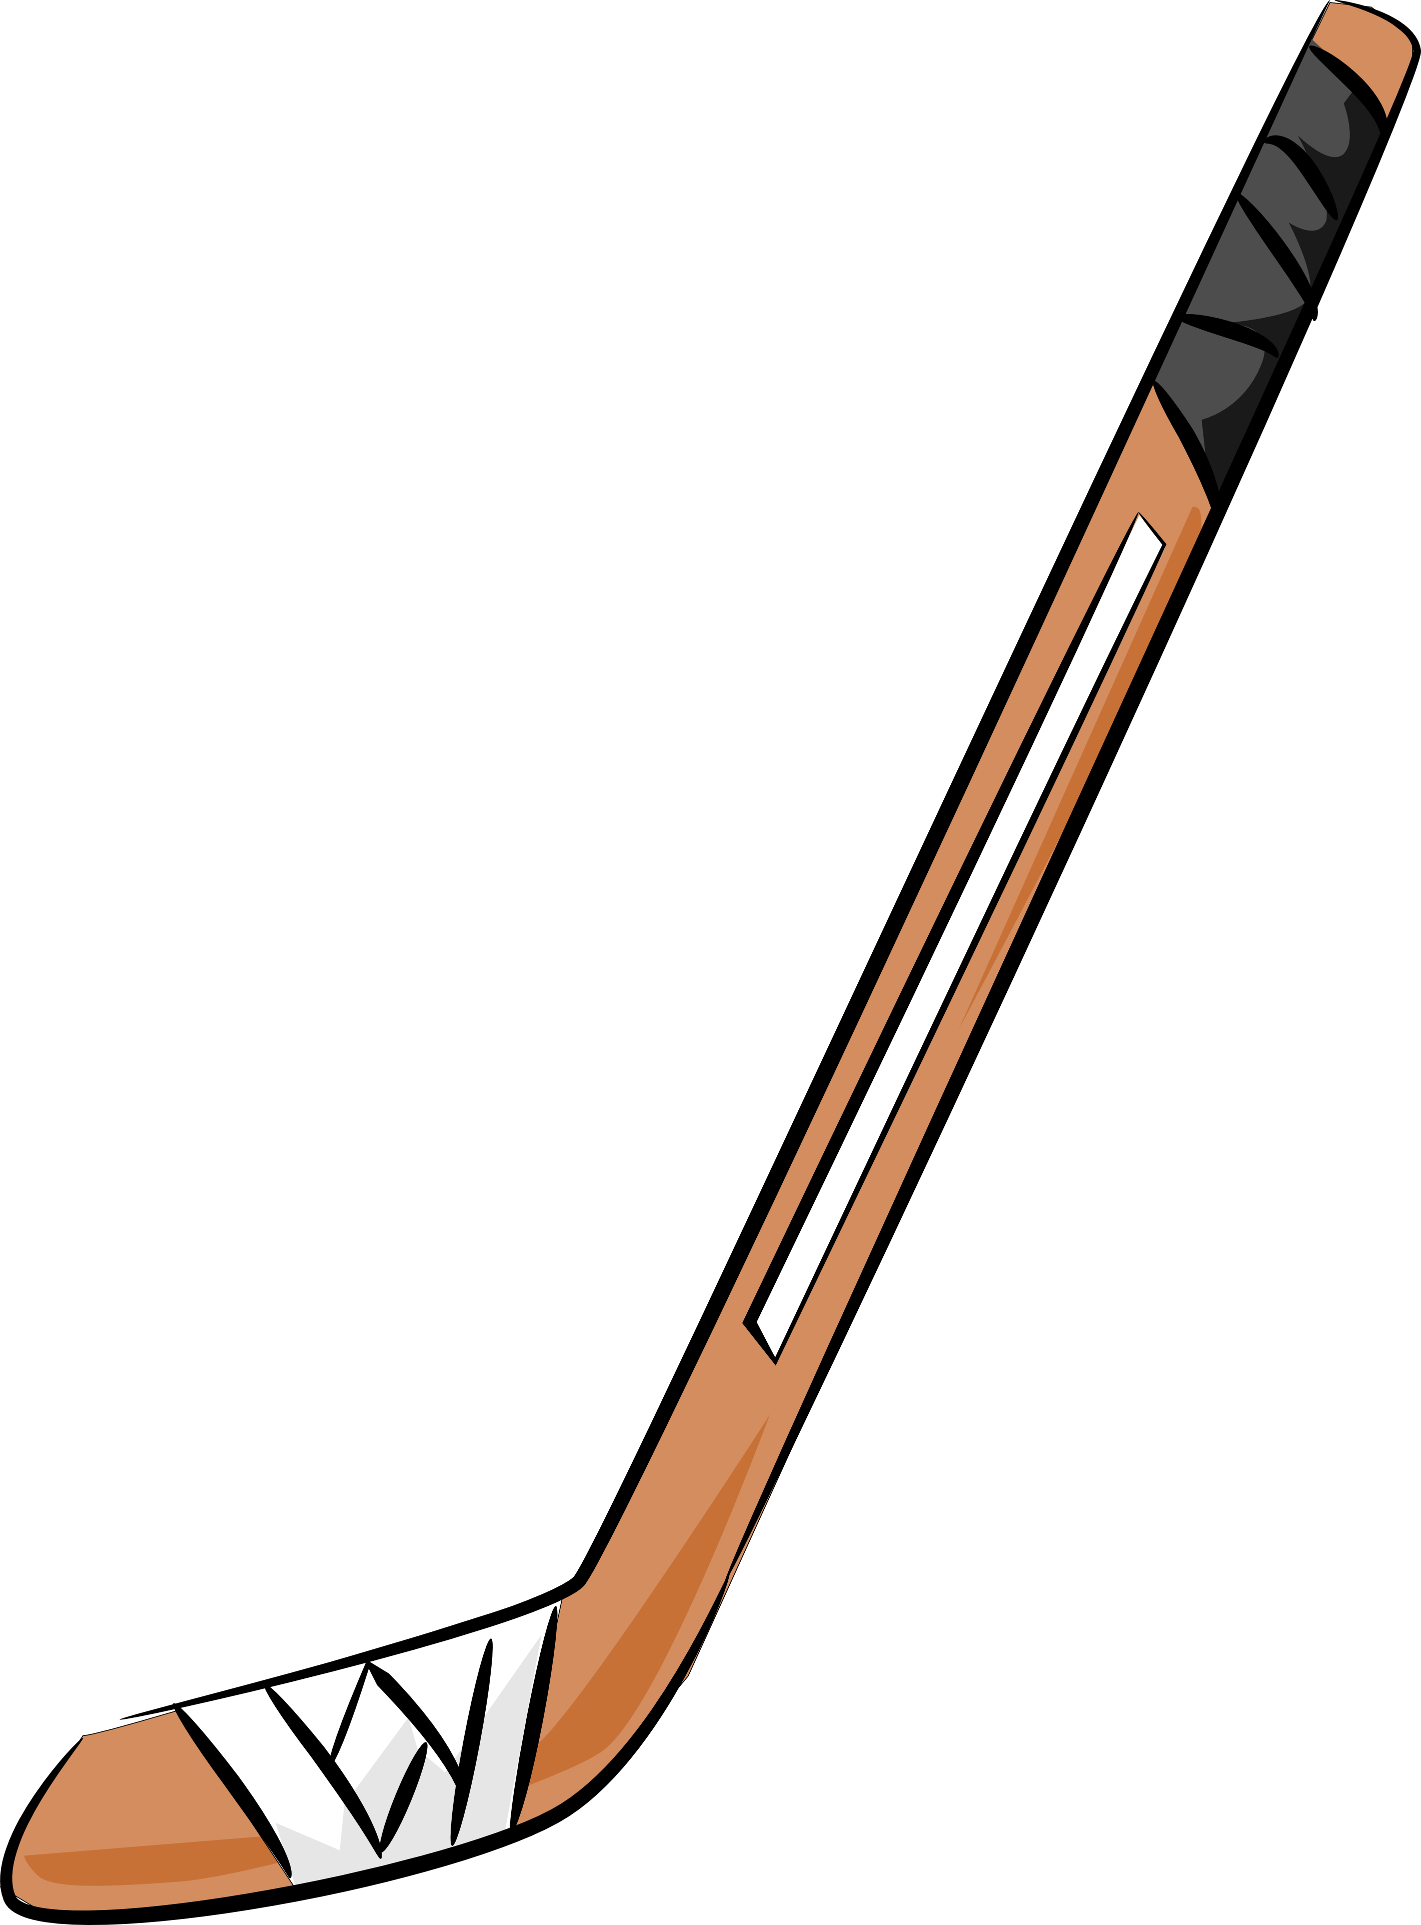 Hockey stick clipart